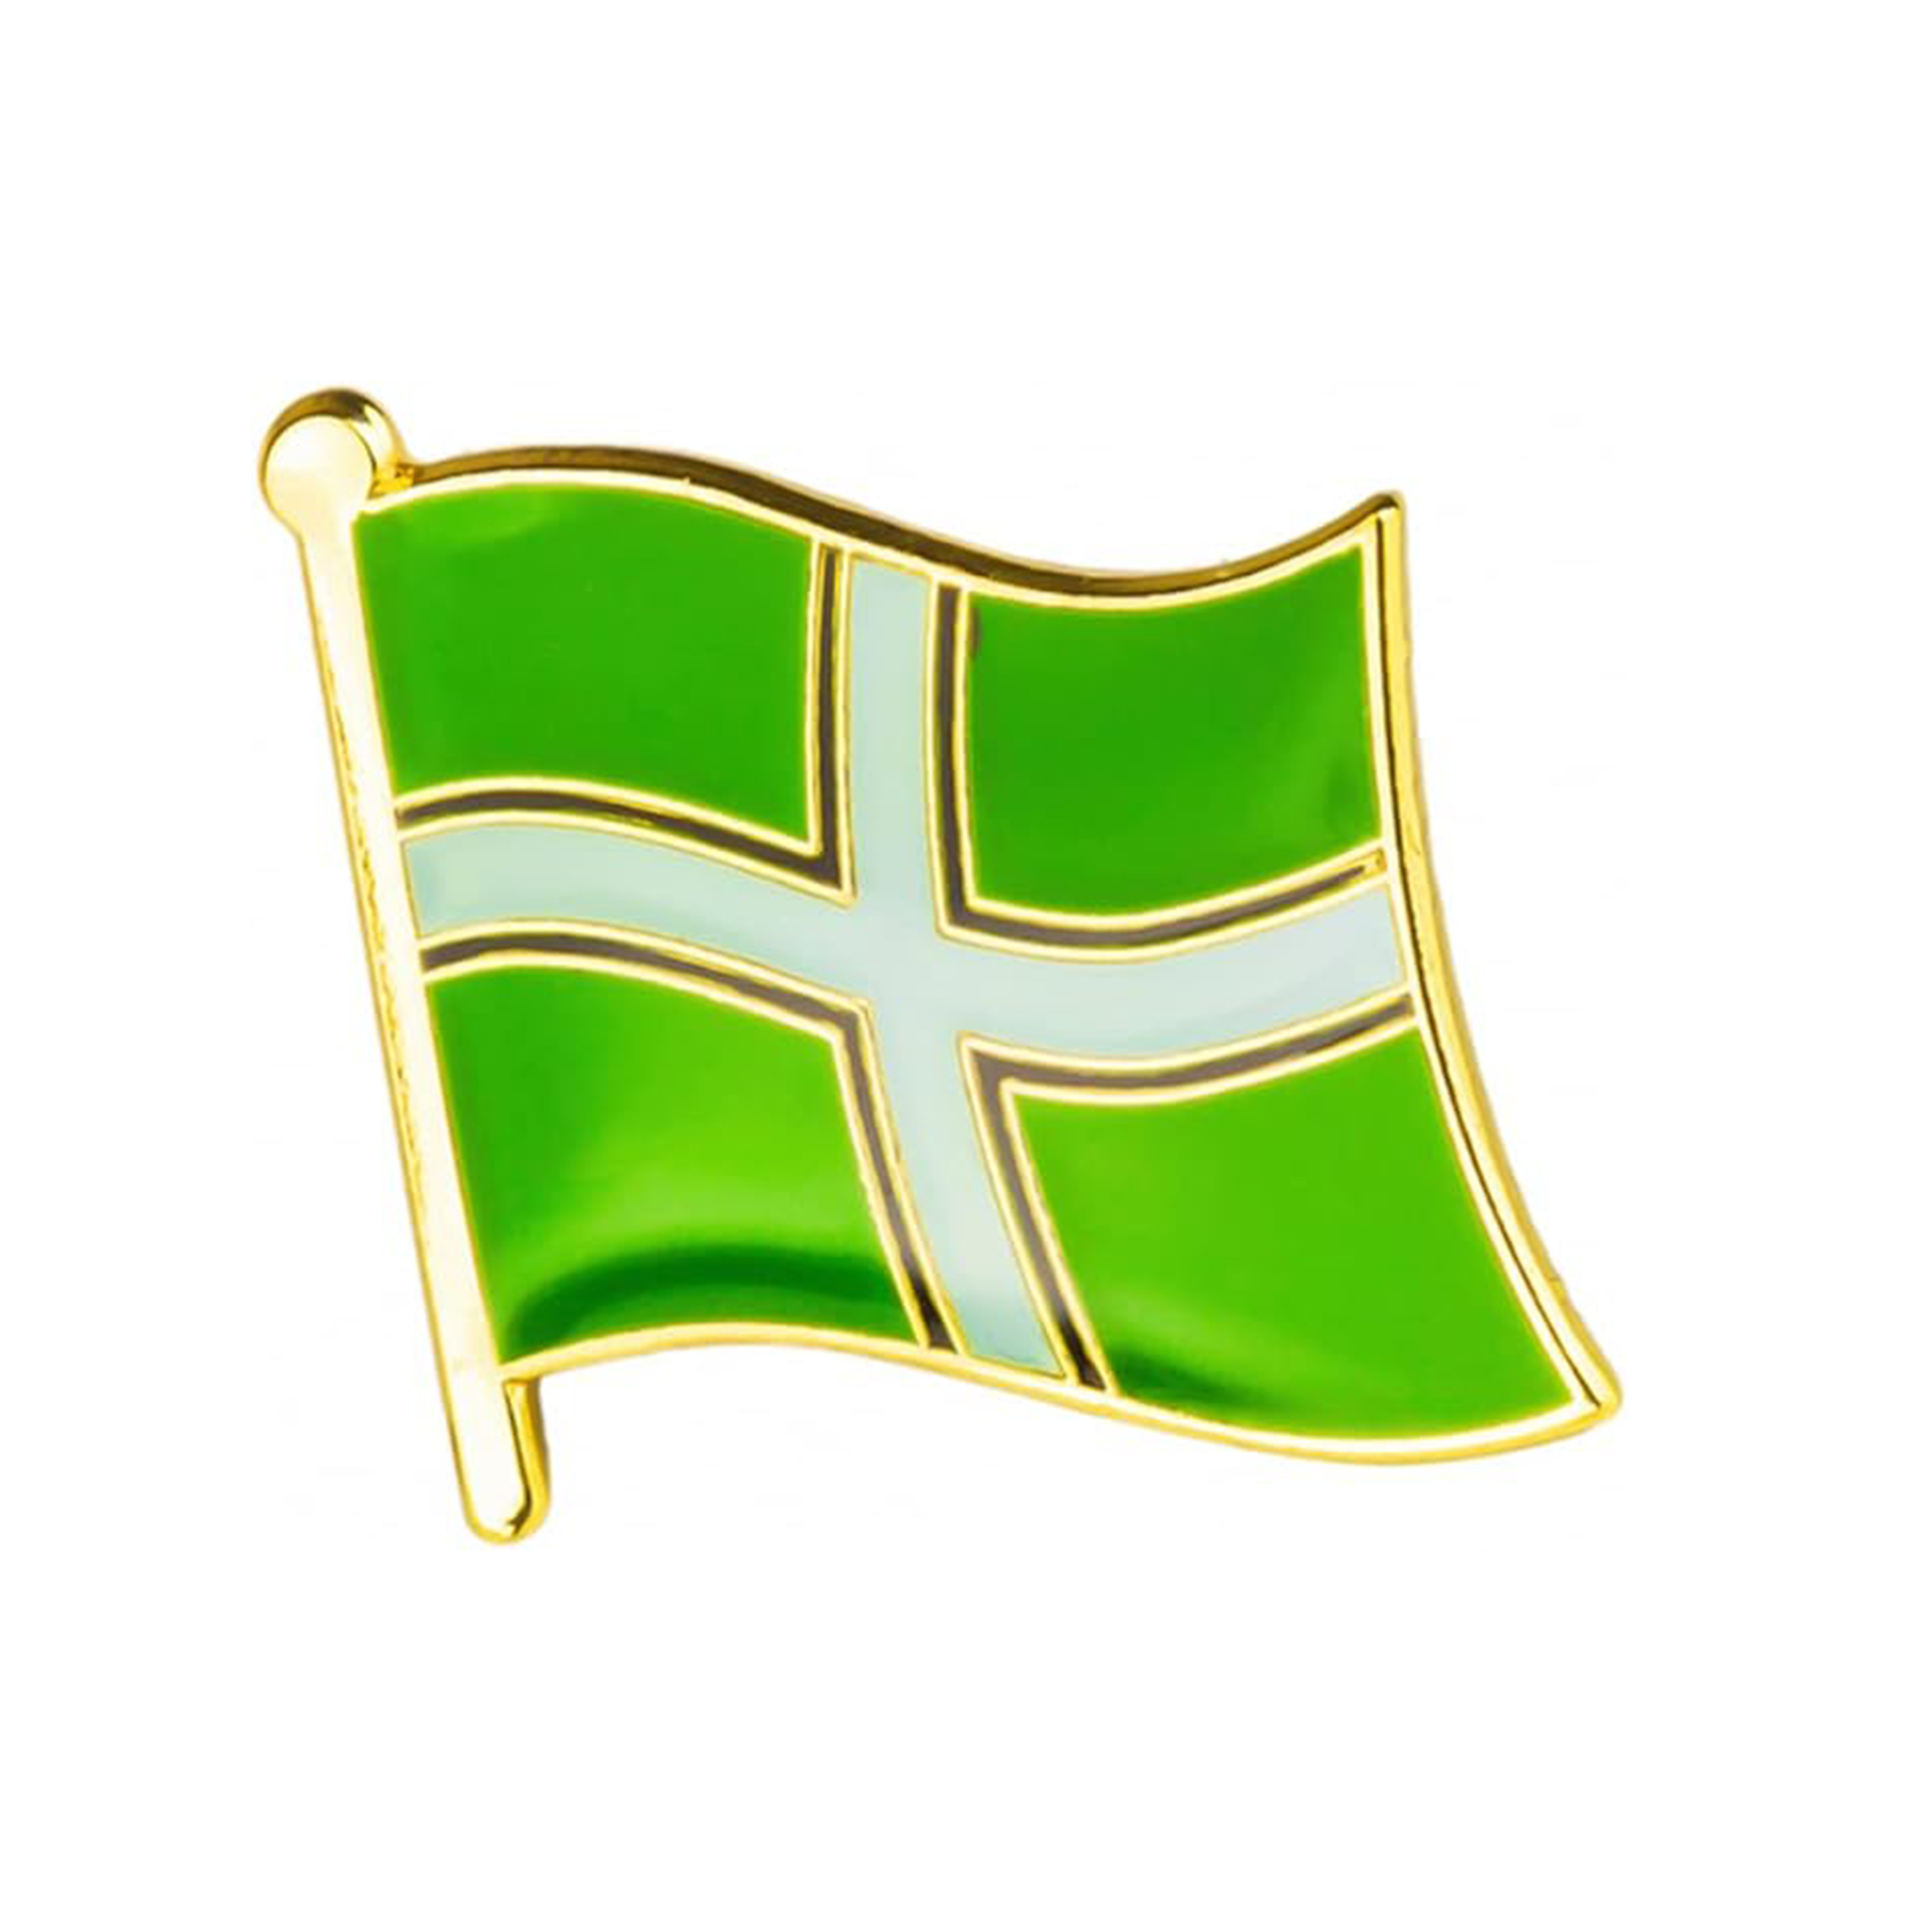 Devon Devonshire Regional English County Flag Pin Badge